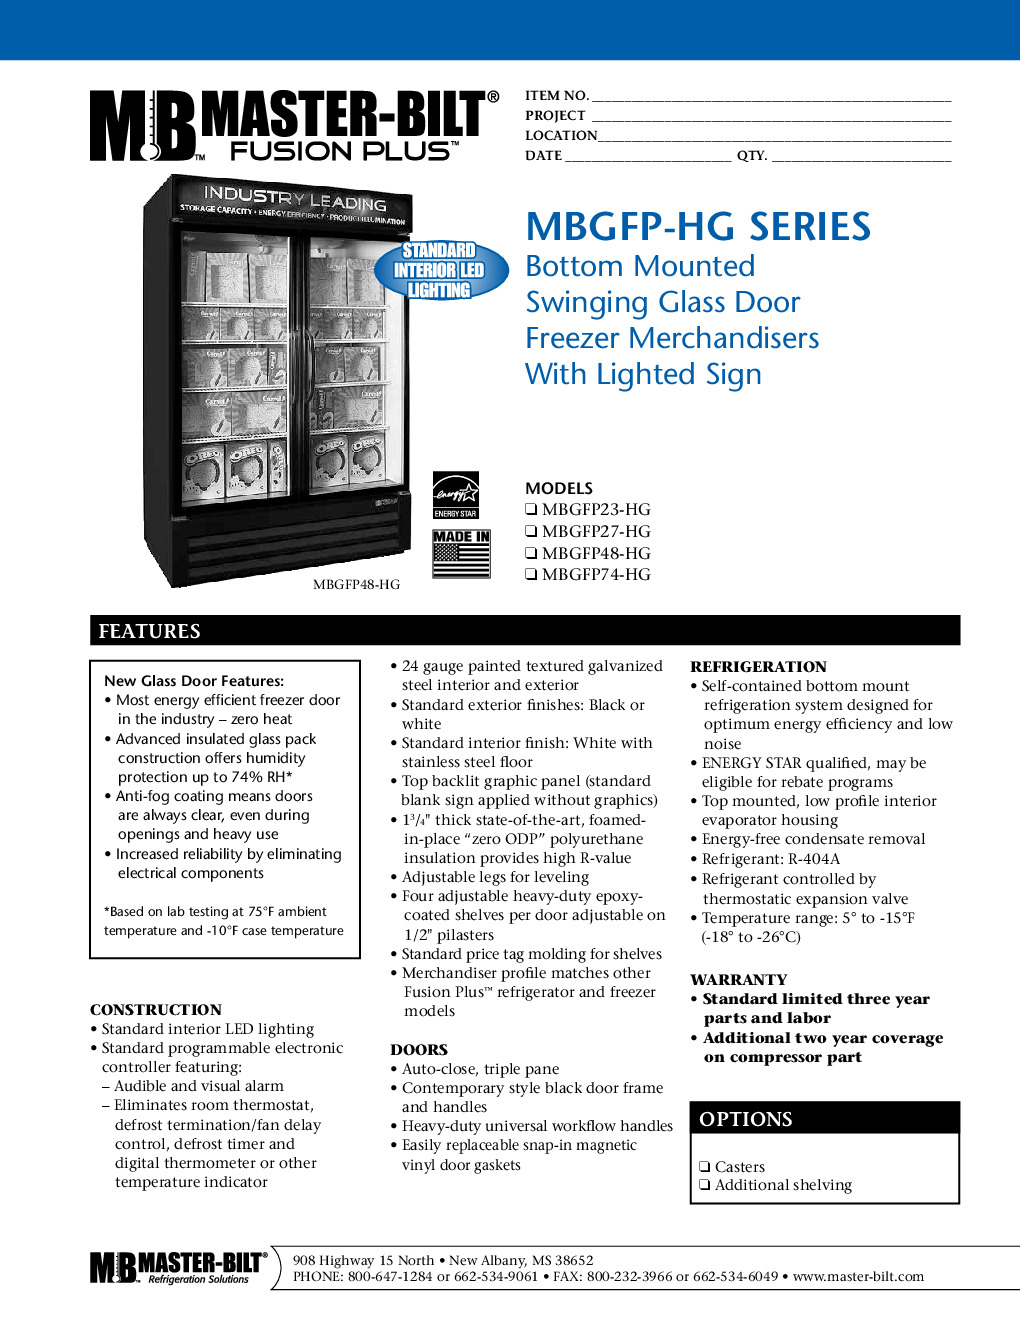 Master-Bilt MBGFP48-HG Merchandiser Freezer